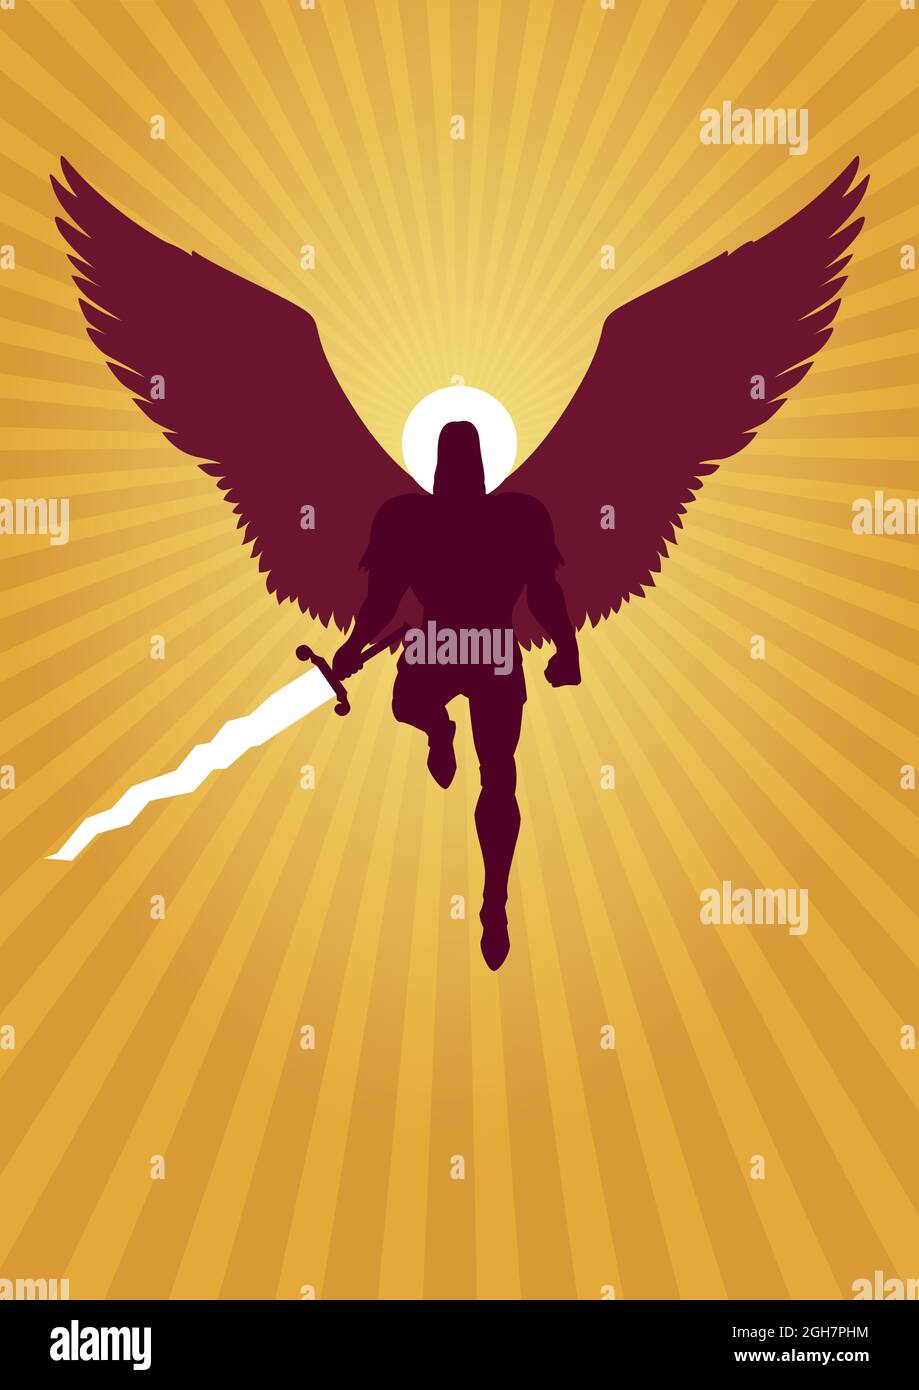 Archangel Michael Flying Silhouette Stock Vector